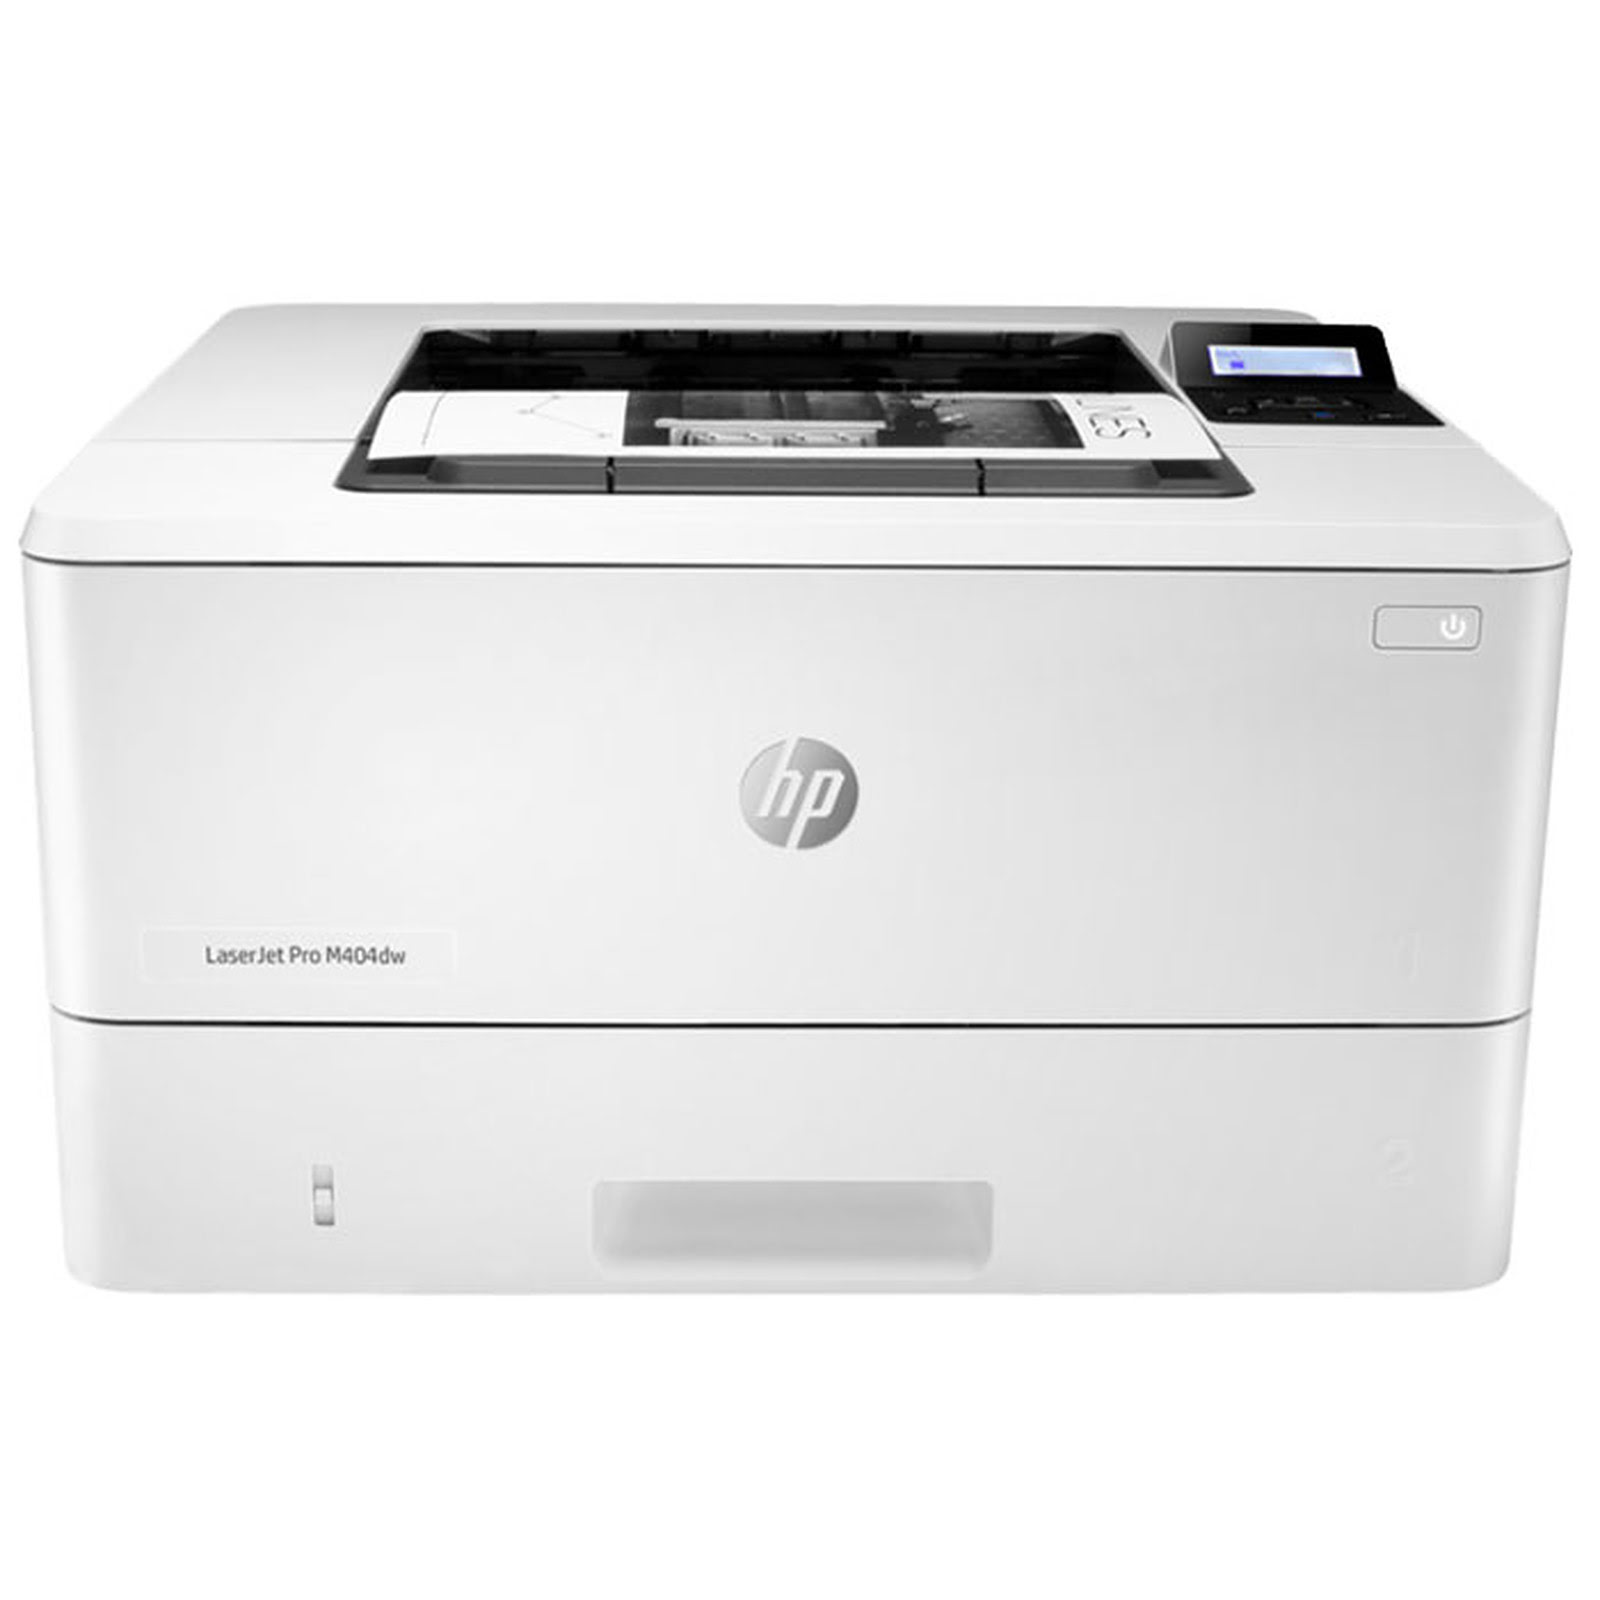 Imprimante HP LaserJet Pro M404dw